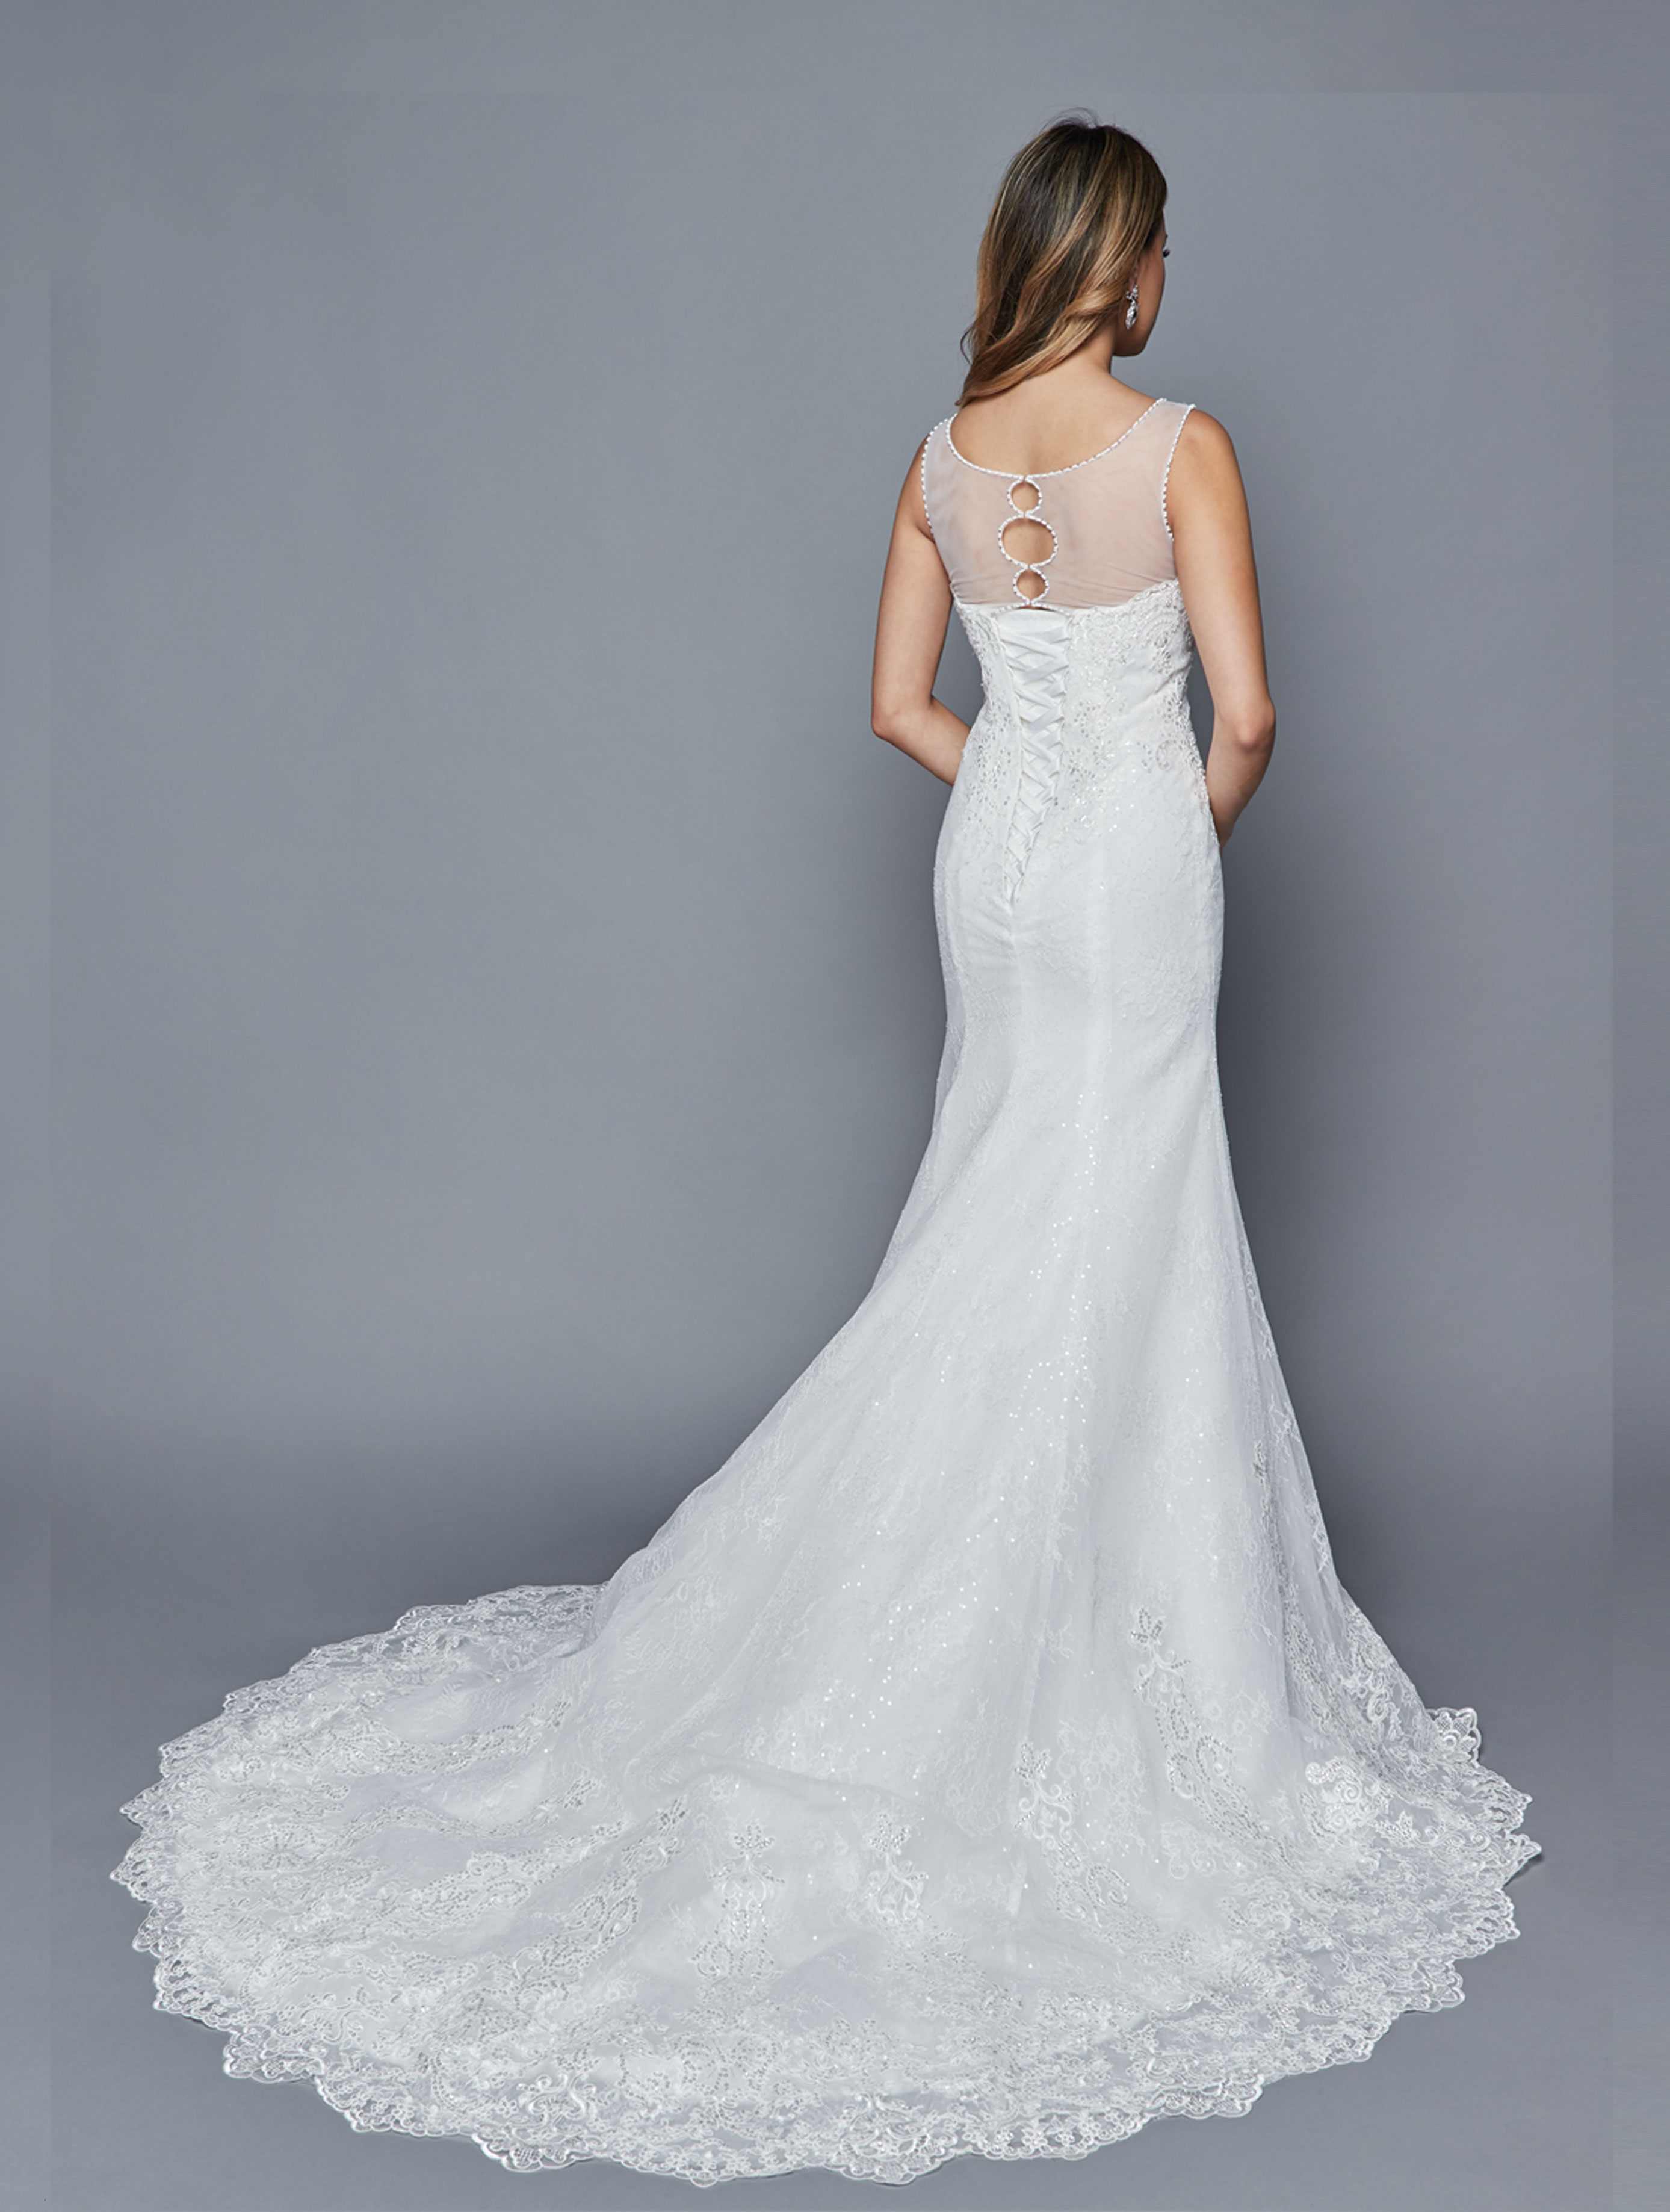 Illusion Sweetheart Bodice White Mermaid Style Wedding Gown 